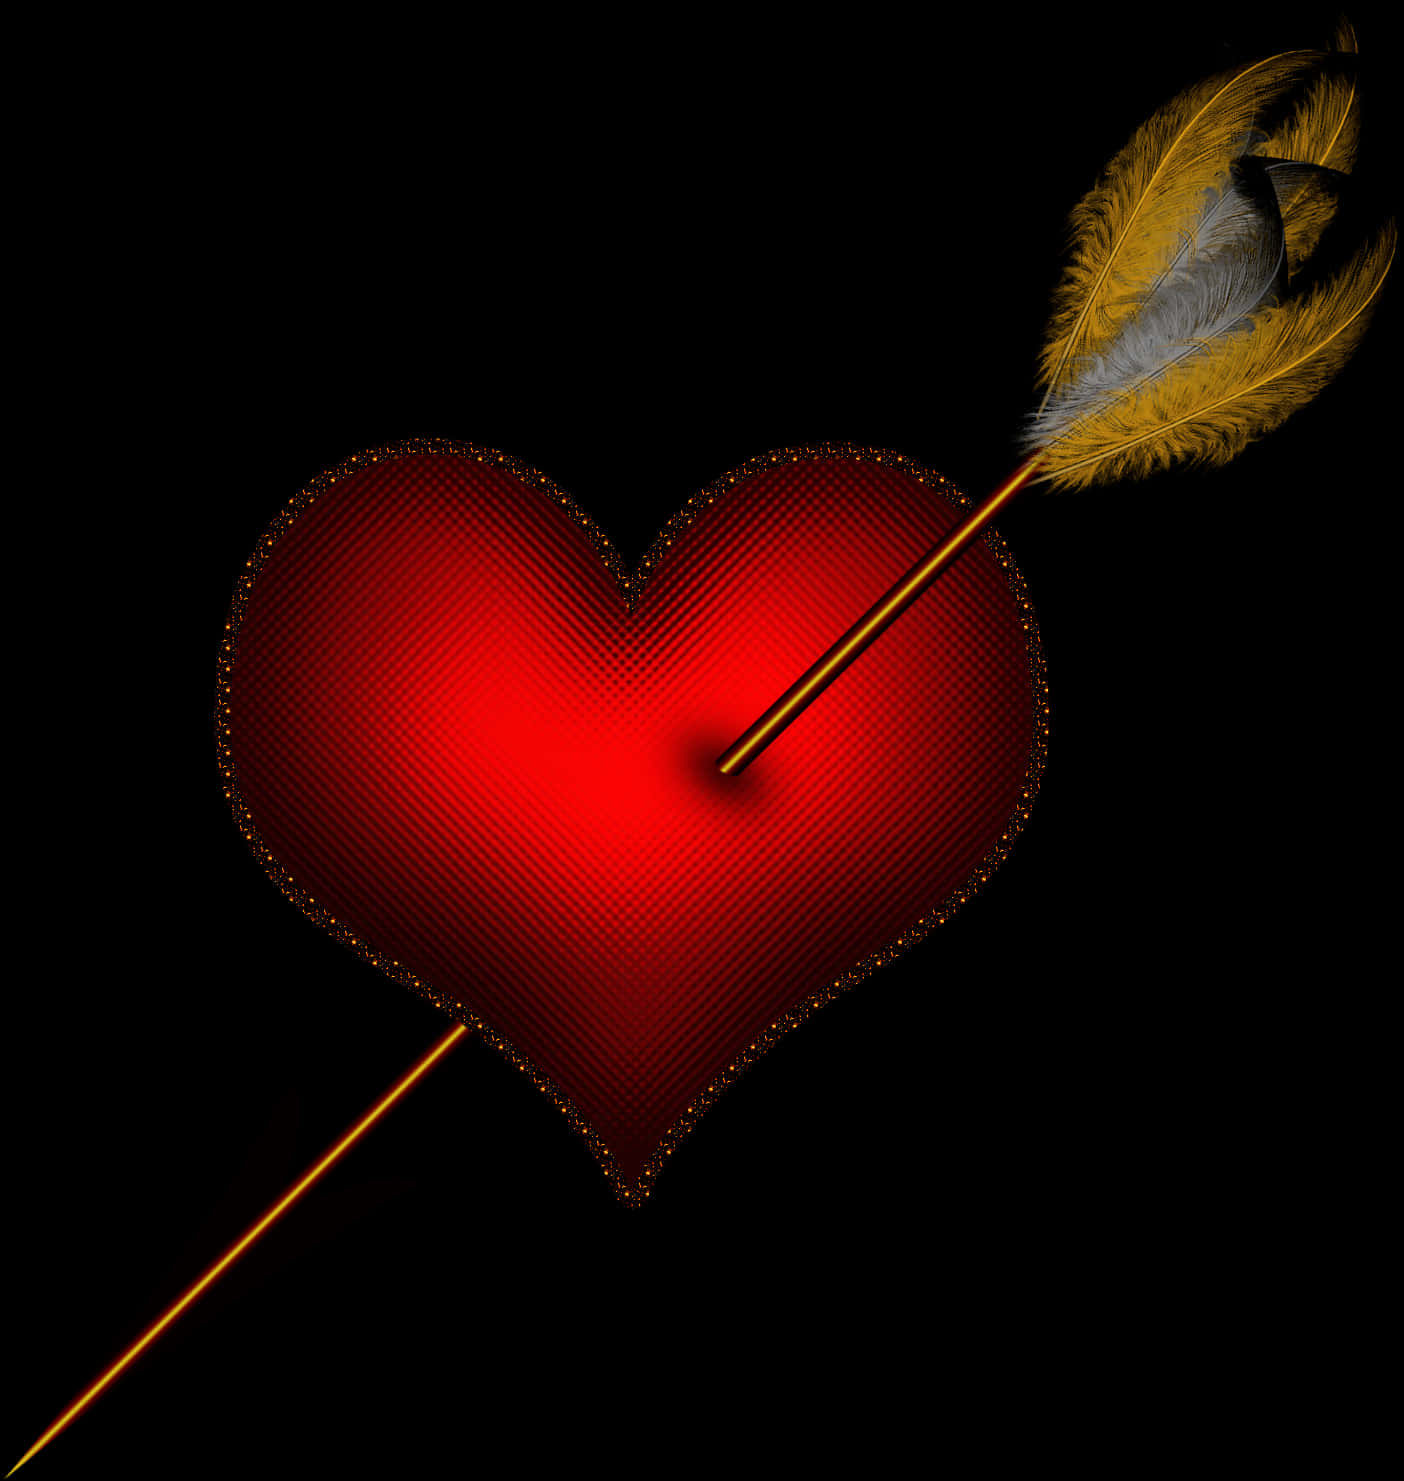 A Heart With A Feathered Arrow